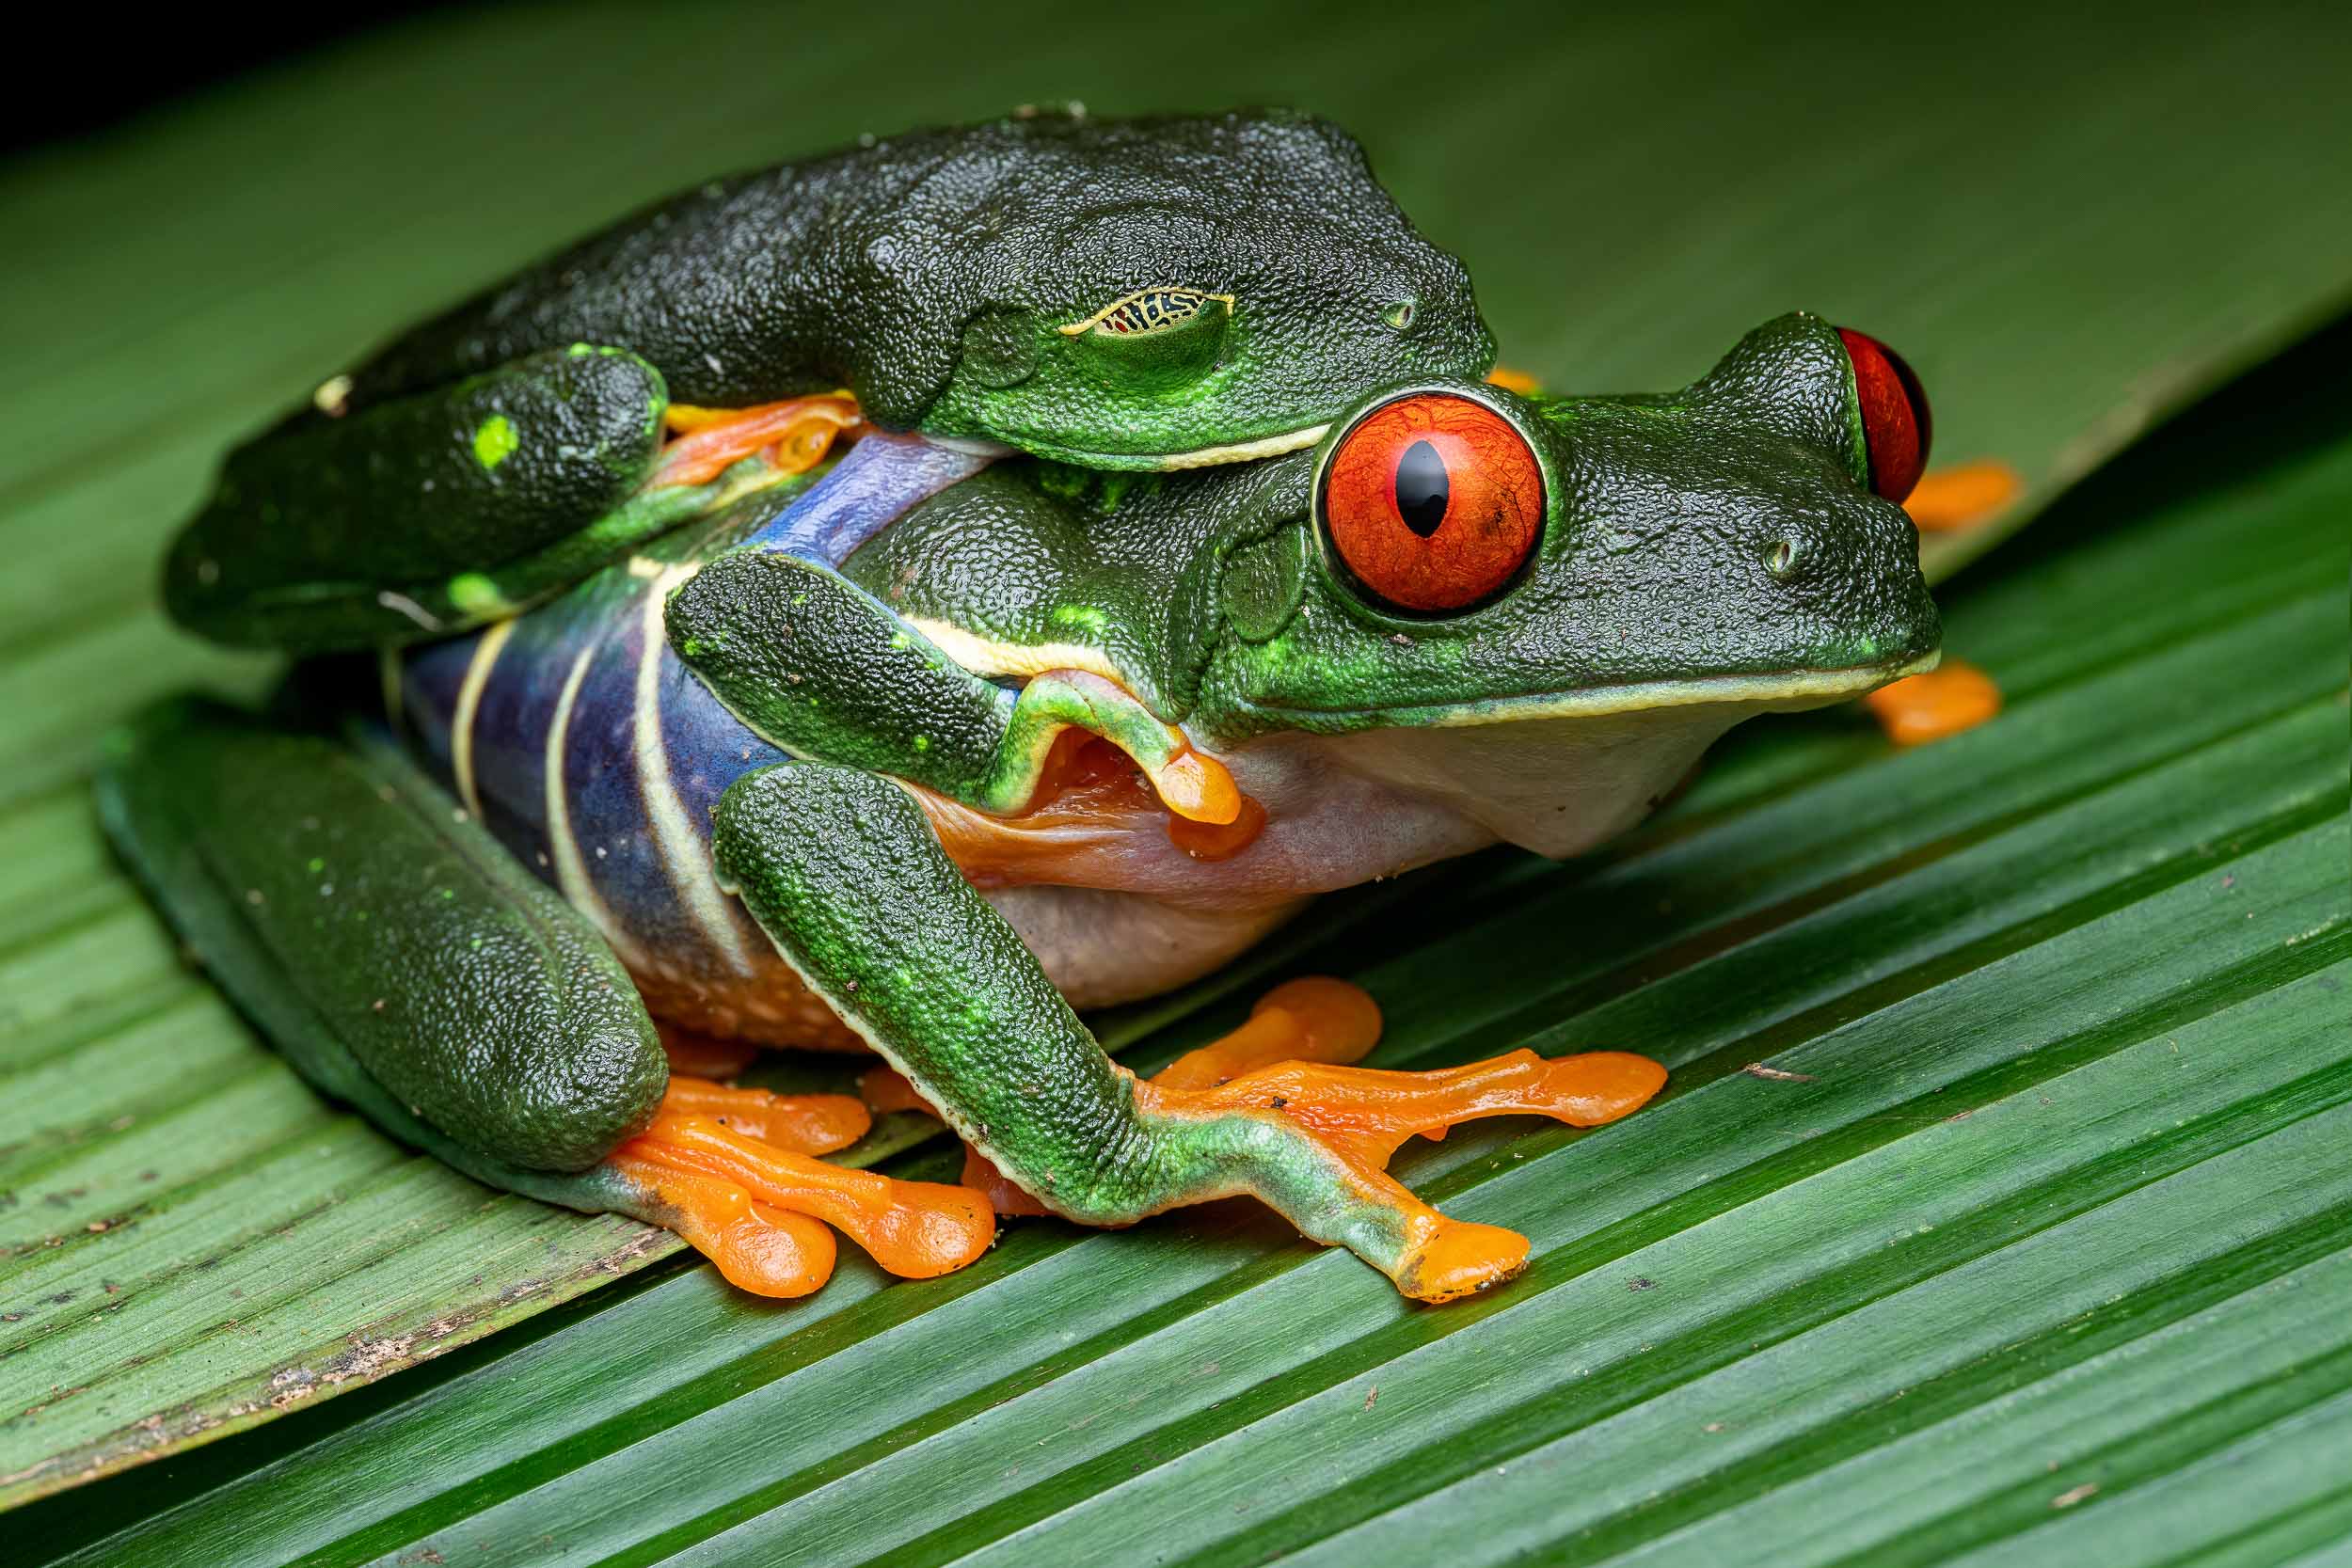 Agalychnis callidryas / Red-eyed tree frog (Costa Rica)